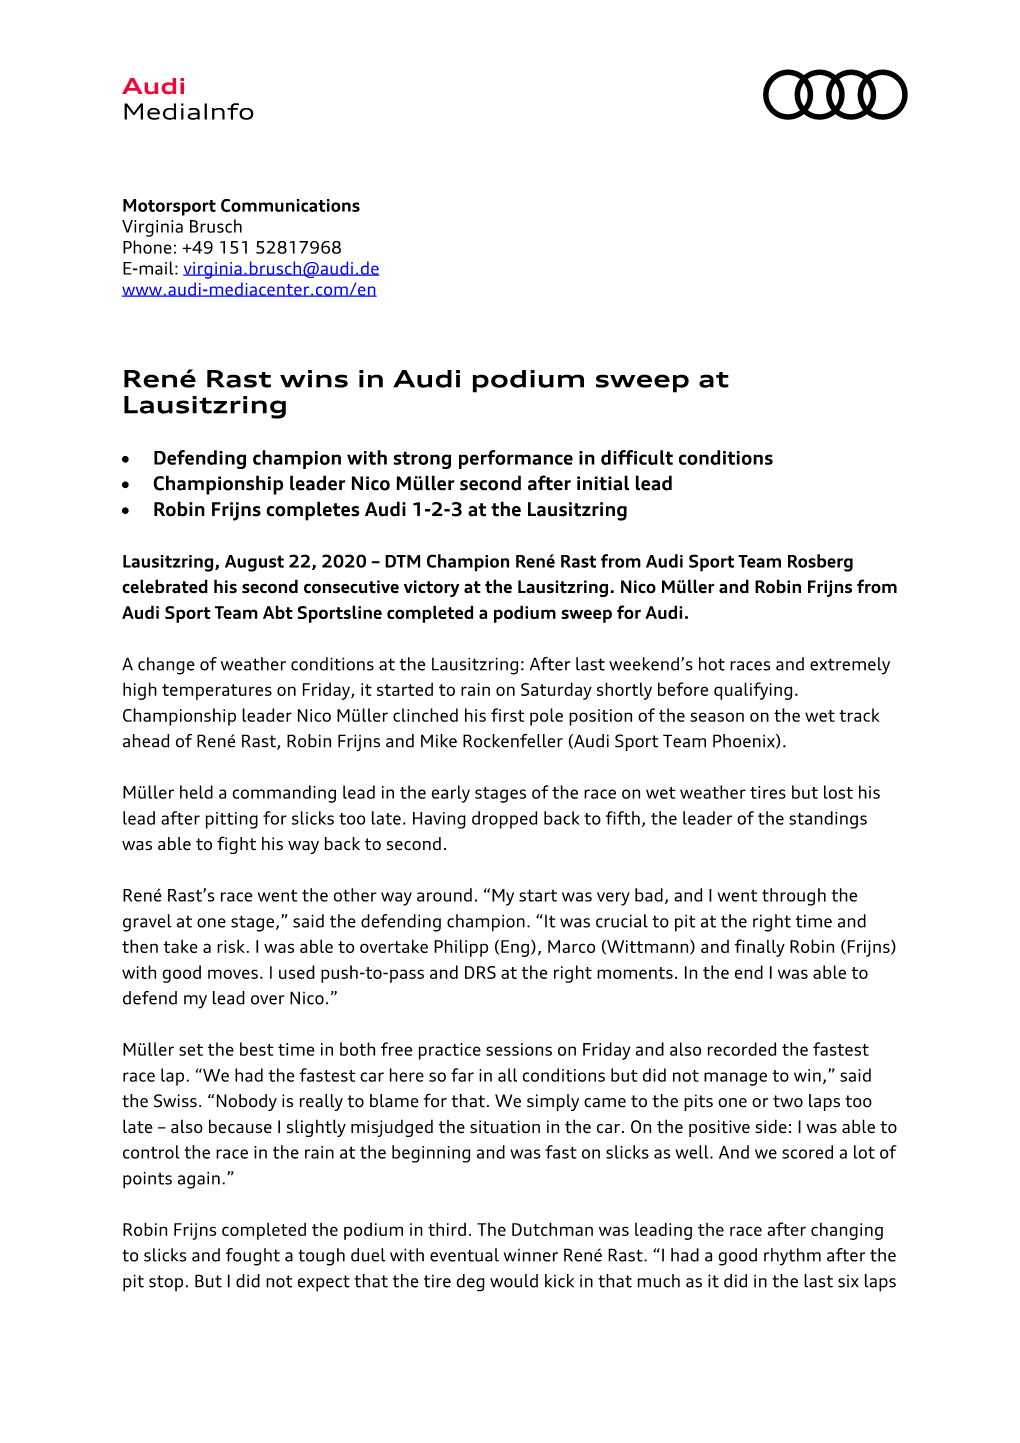 René Rast Wins in Audi Podium Sweep at Lausitzring